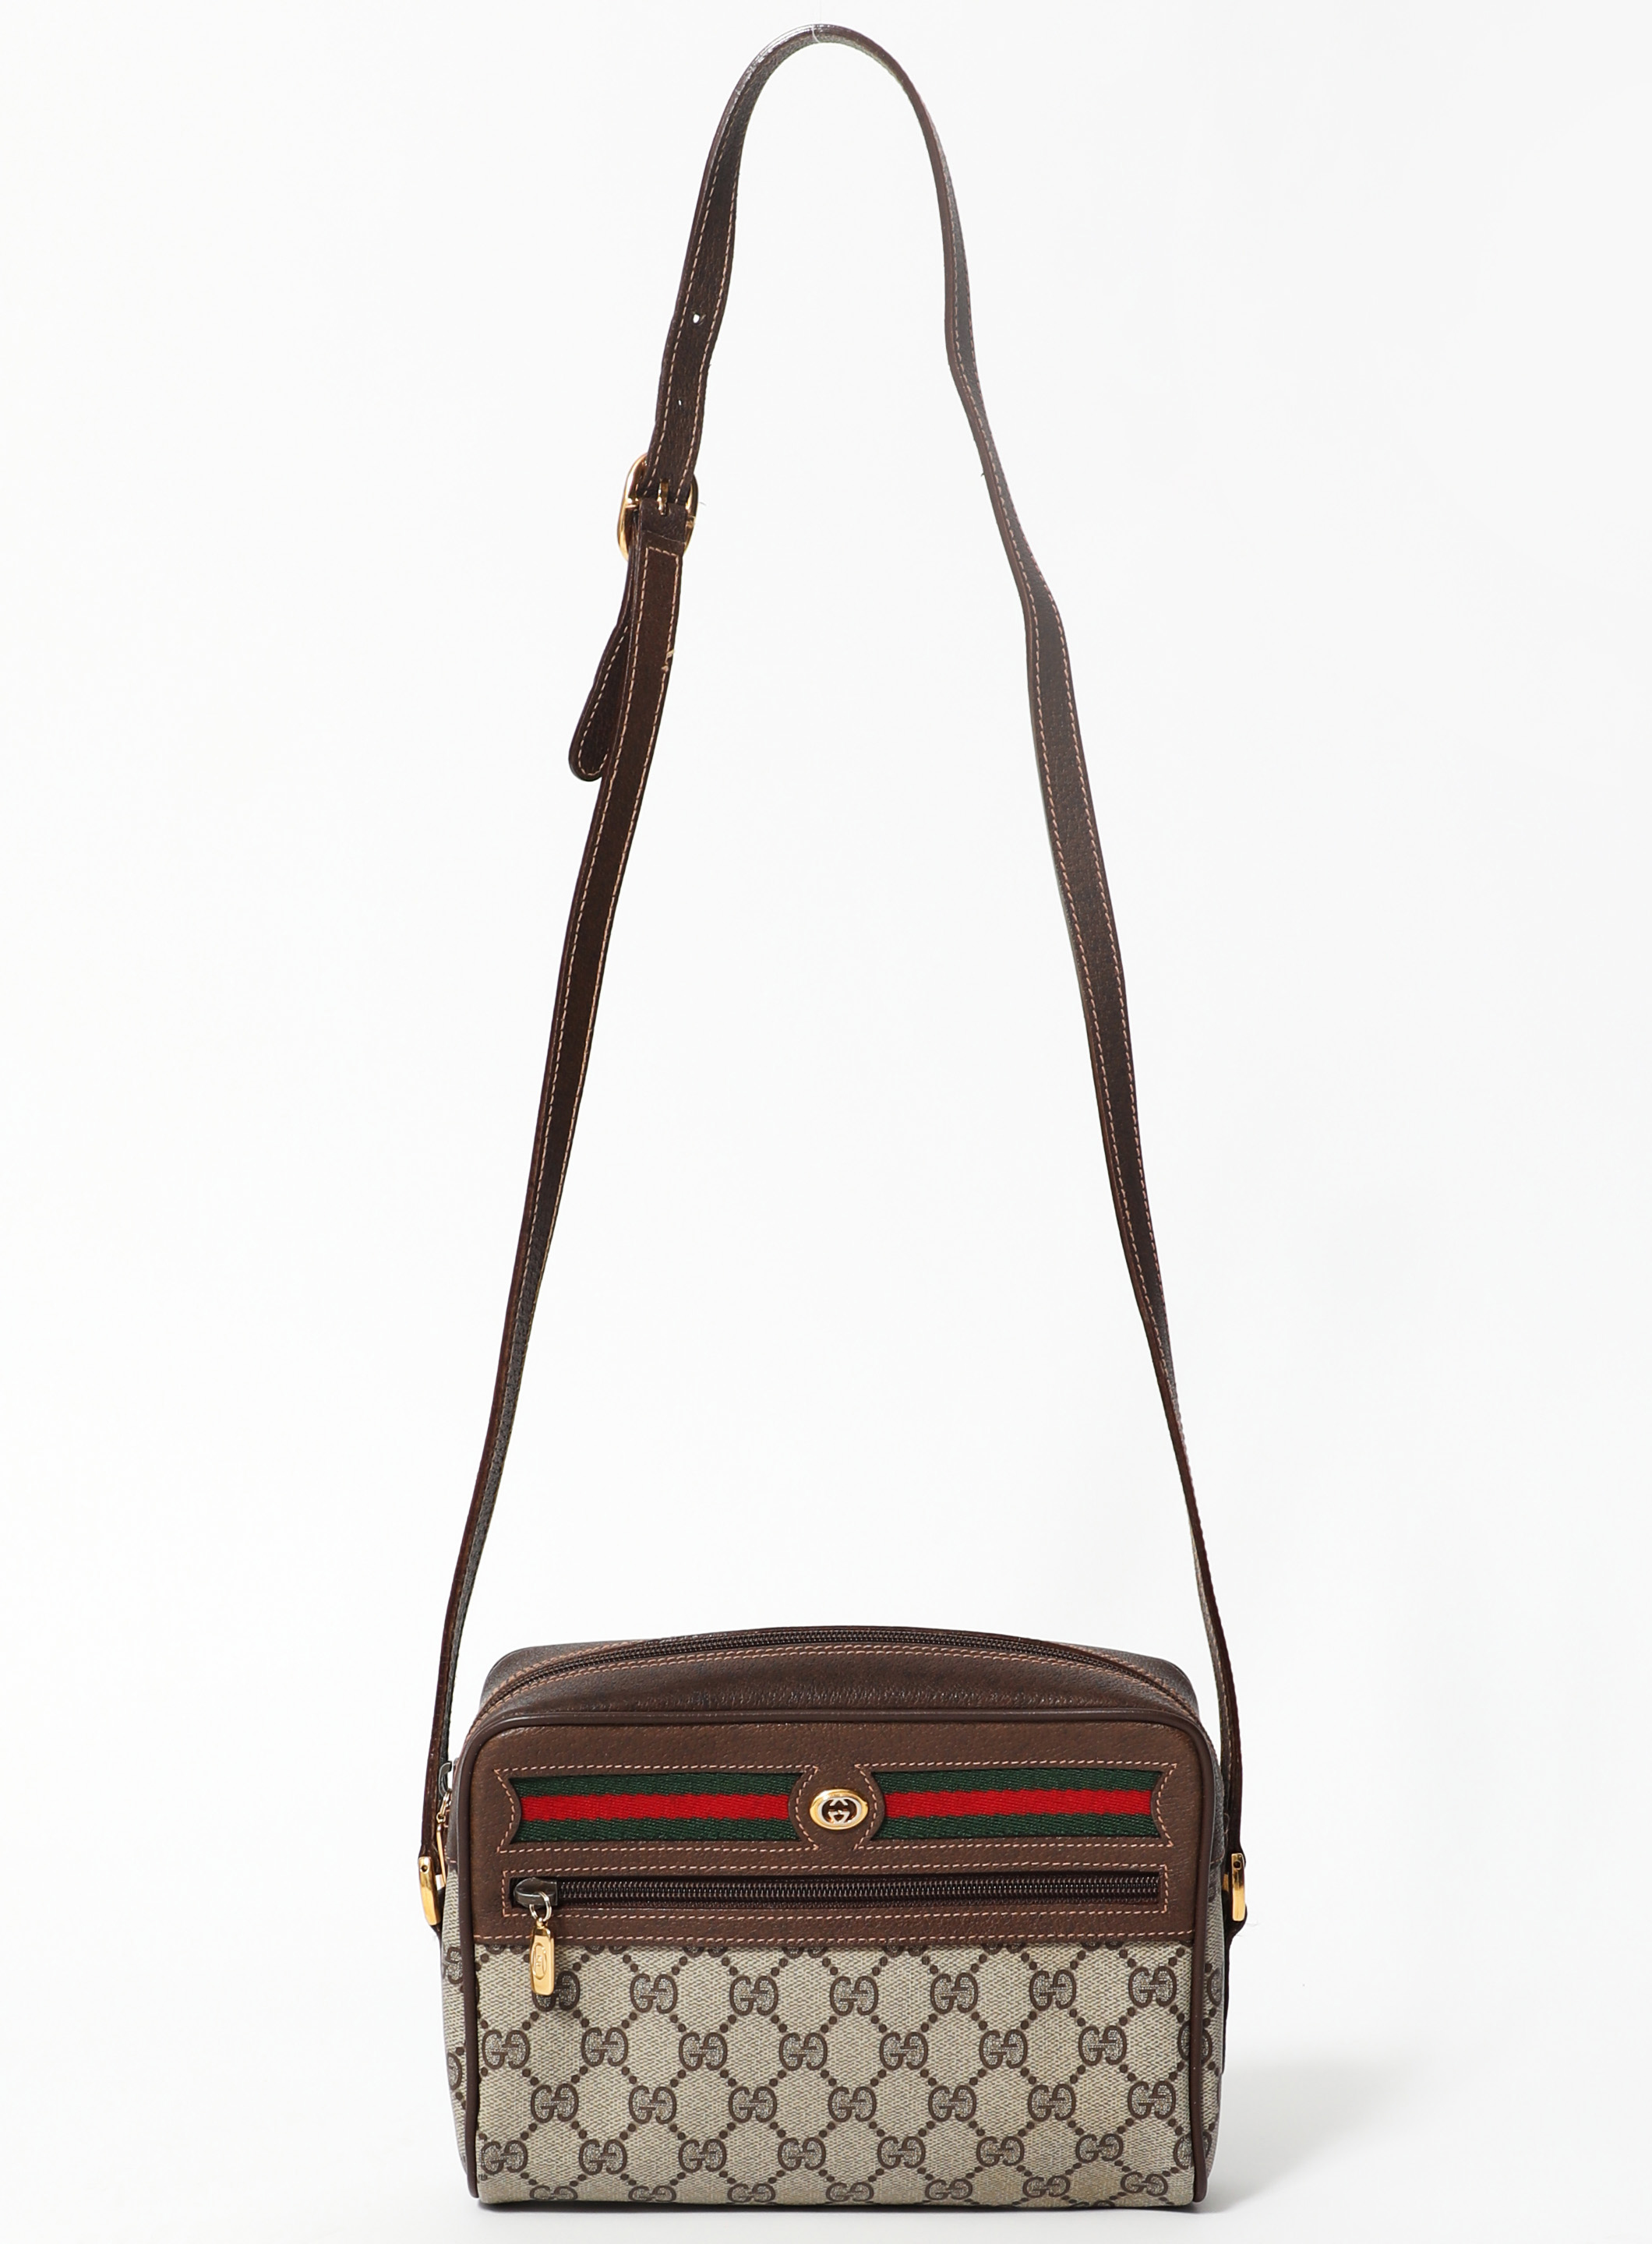 GUCCI Vintage Monogram Leather Women's Handbag